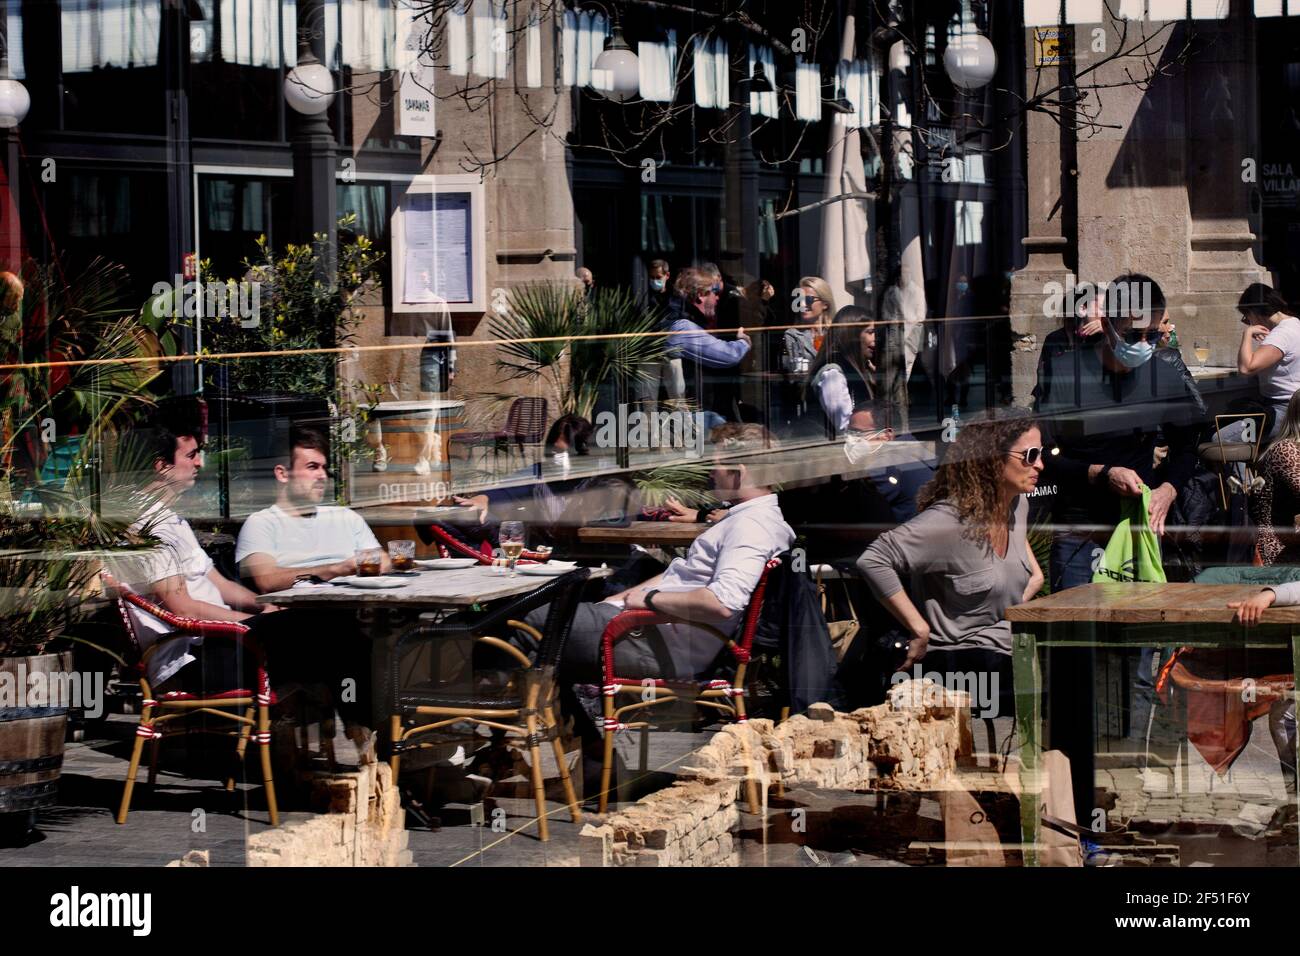 People enjoying the sun and drinks on a terrace, Barcelona, Spain. Stock Photo